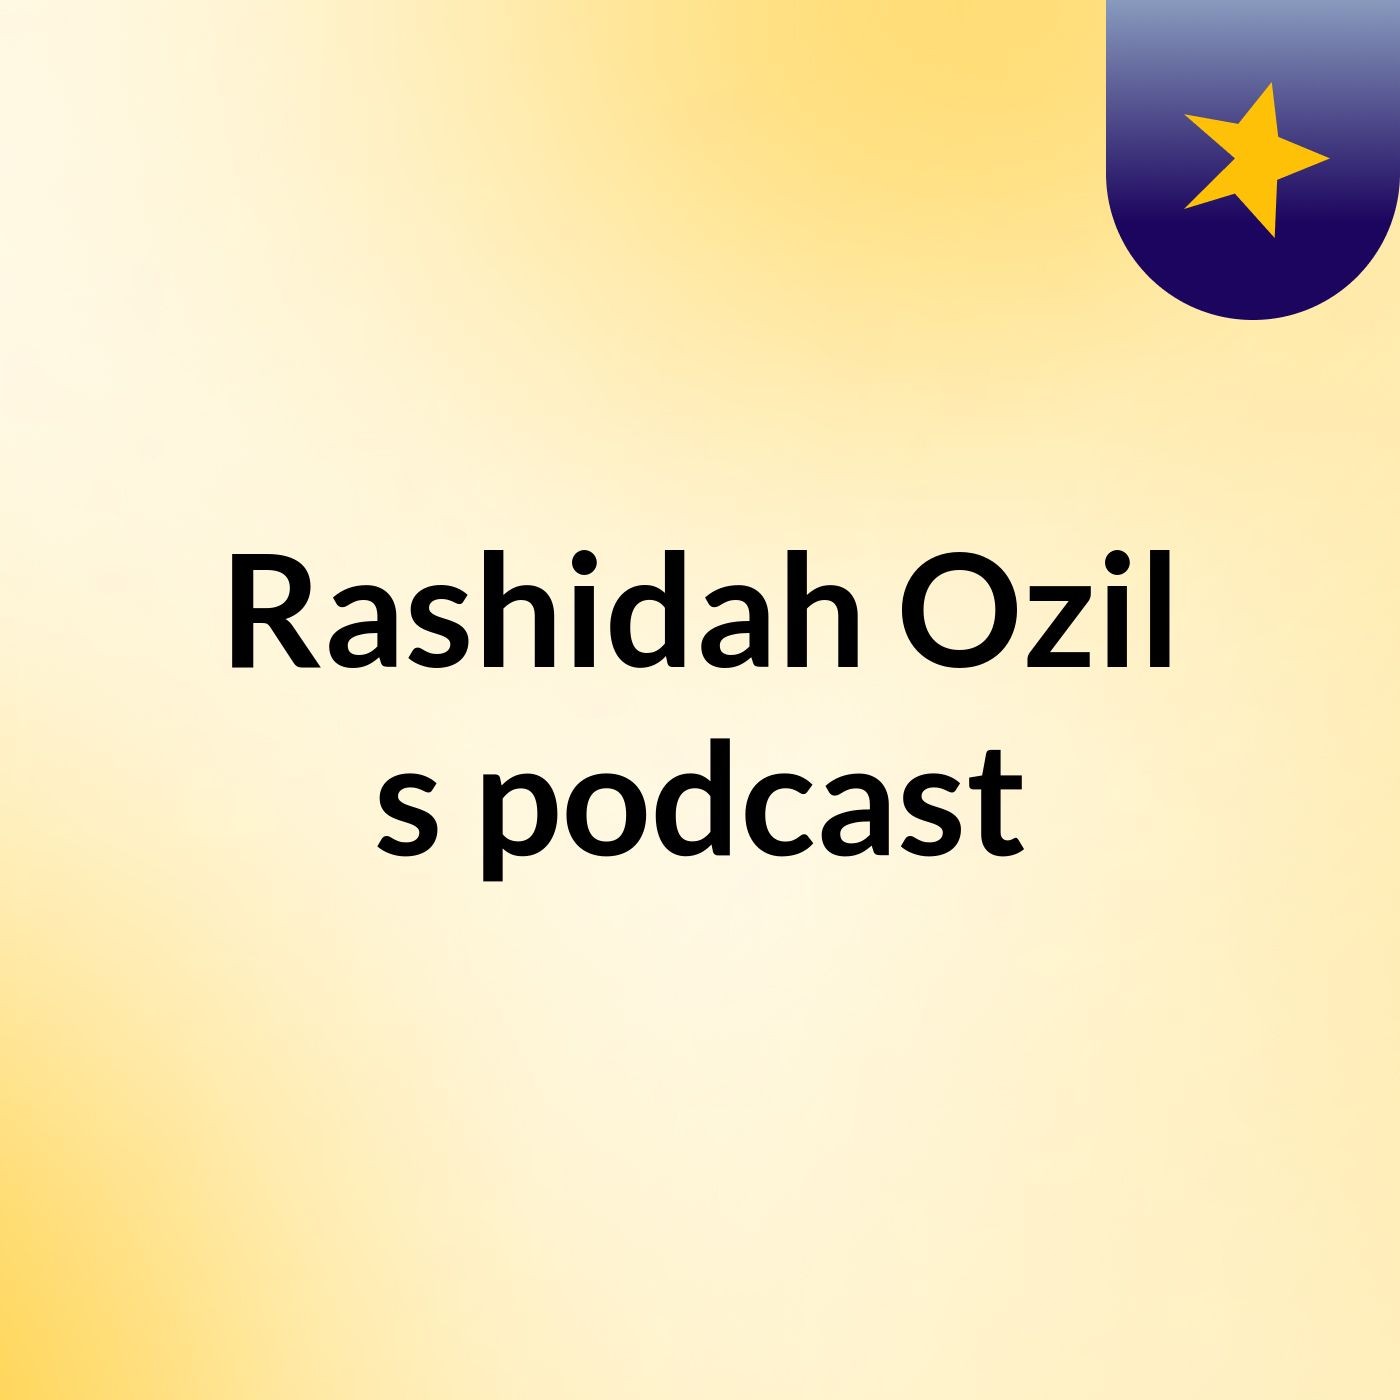 Rashidah Ozil's podcast